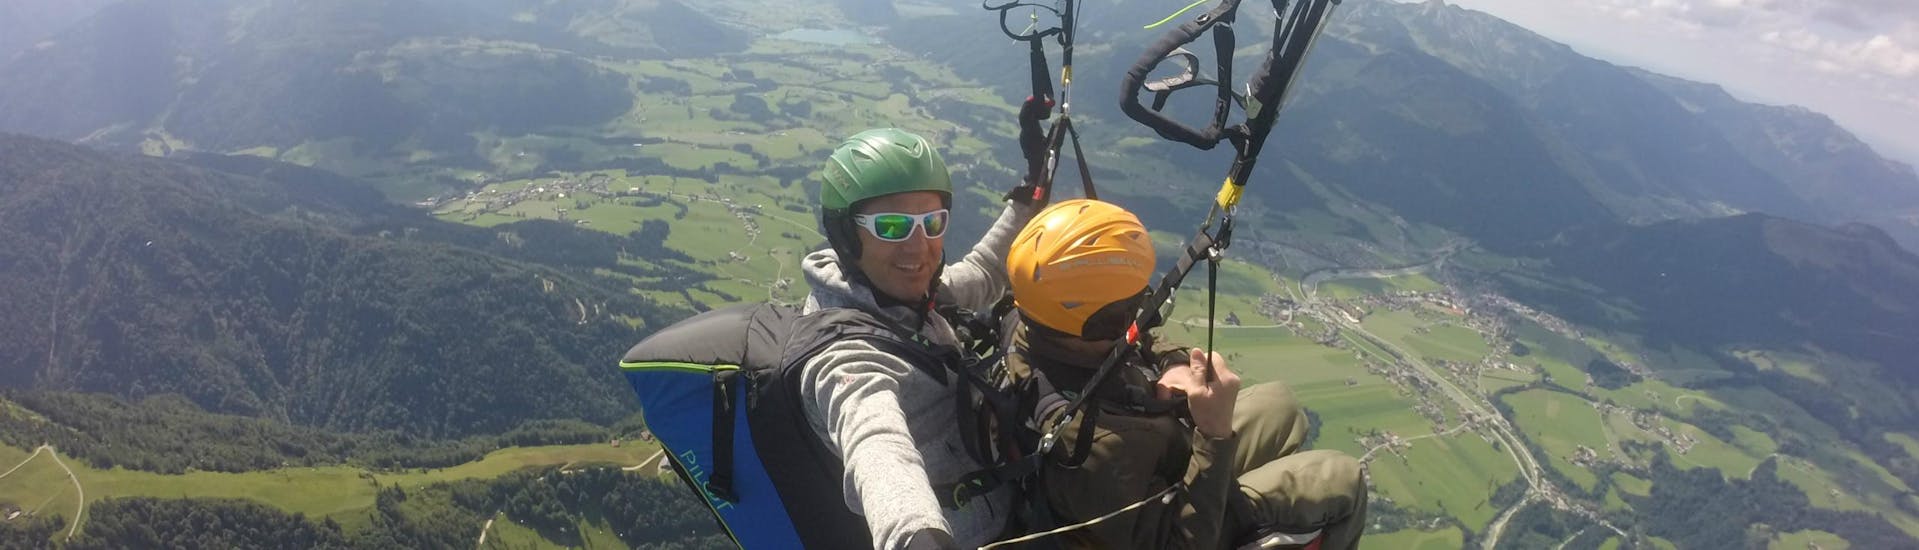 Tandem Paragliding "Panorama" - Kössen.